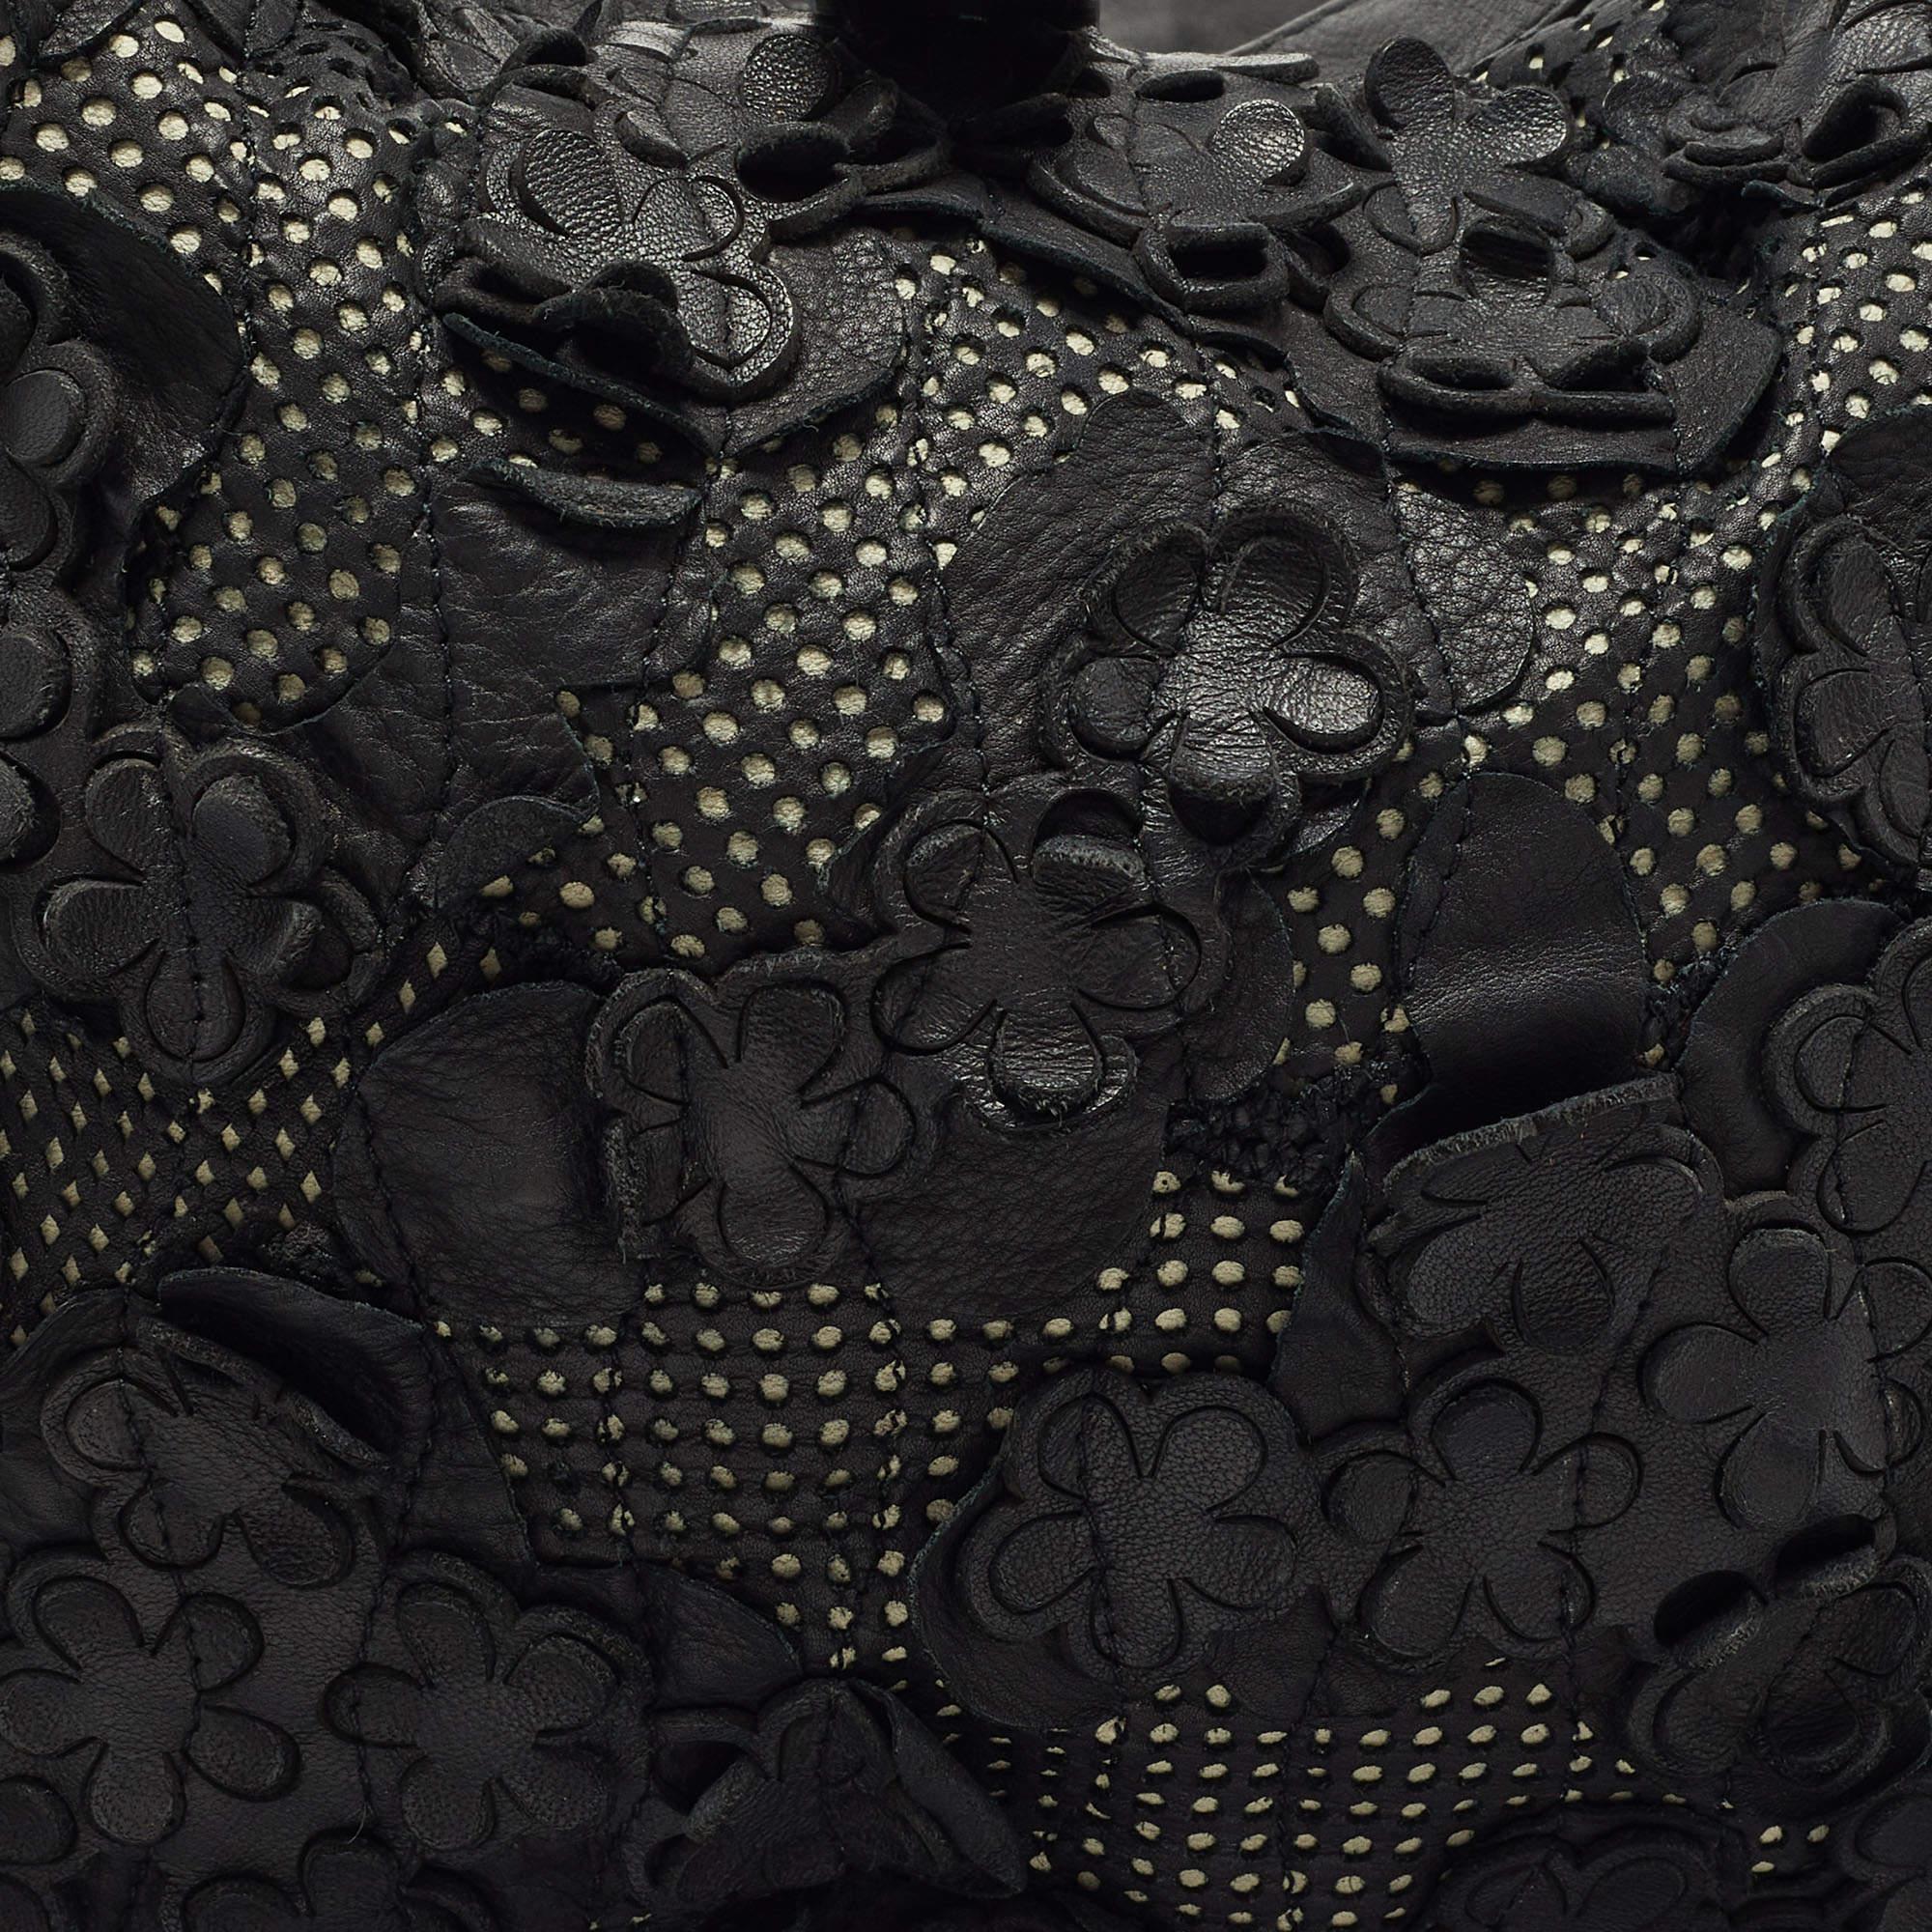 Bottega Veneta Black Lasercut Leather Floral Applique Hobo For Sale 8